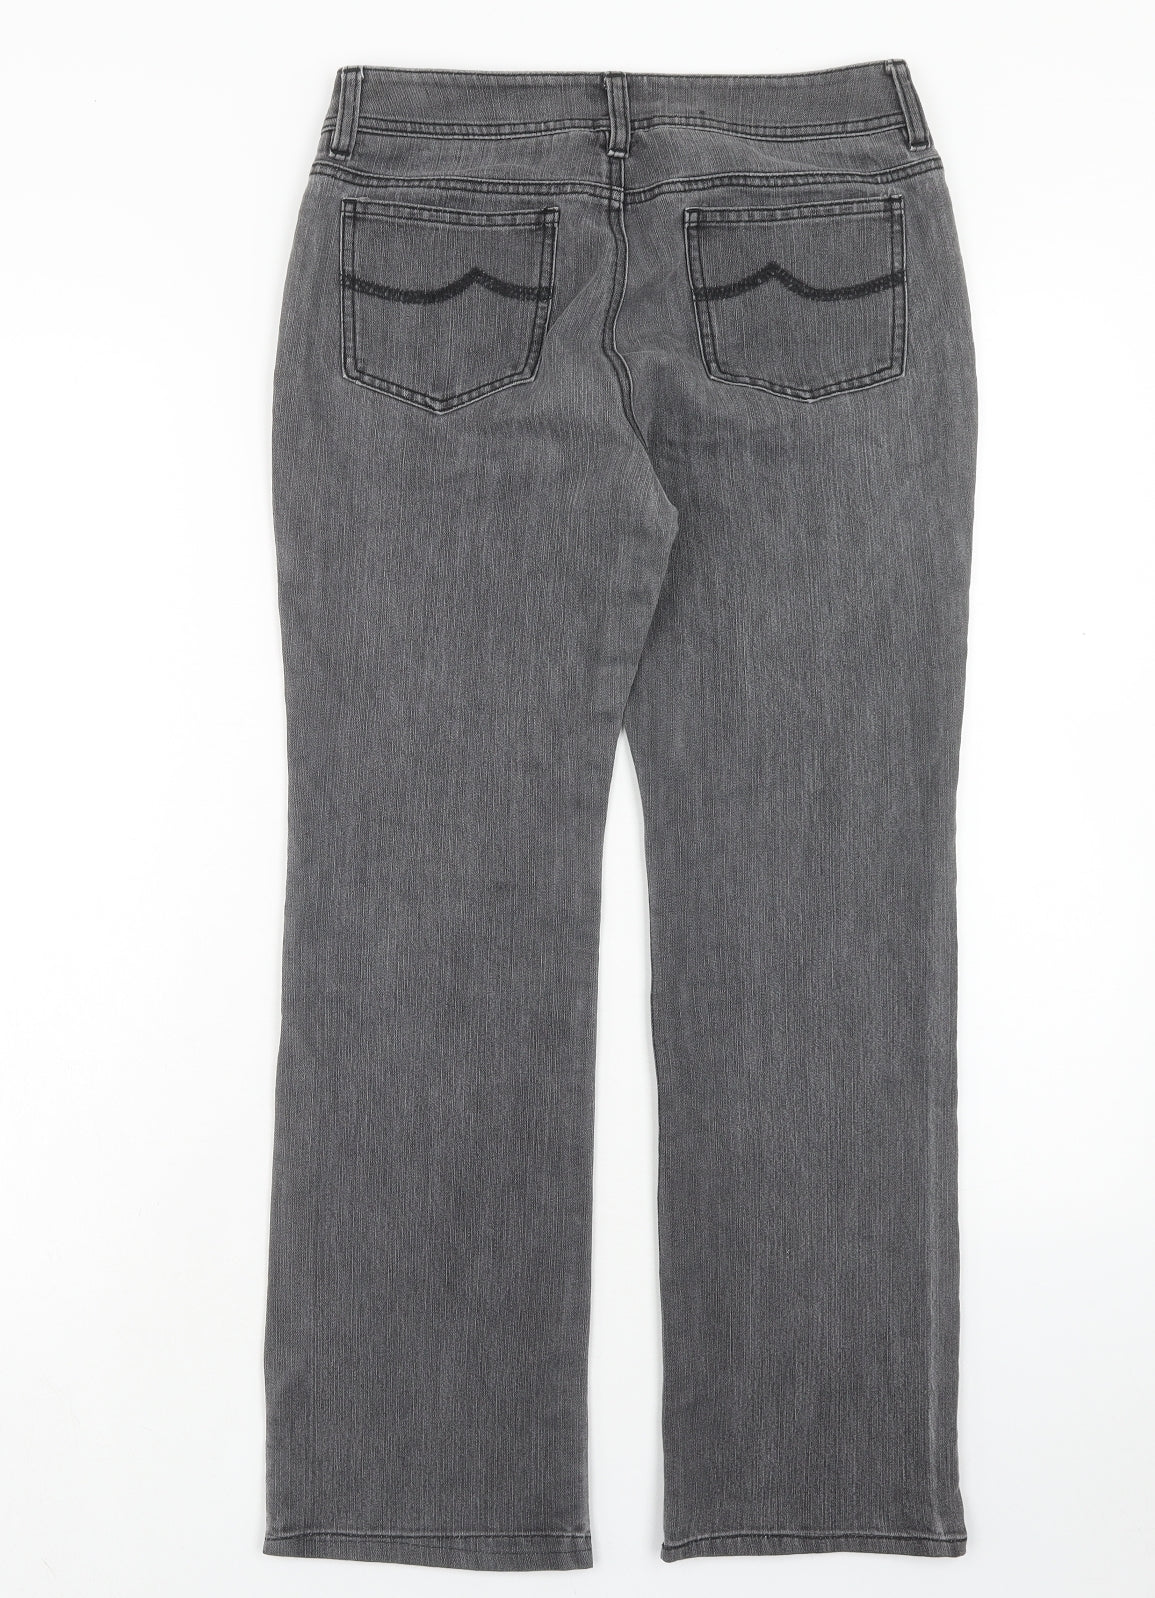 Jones New York Womens Grey Cotton Straight Jeans Size 28 in Regular Zip